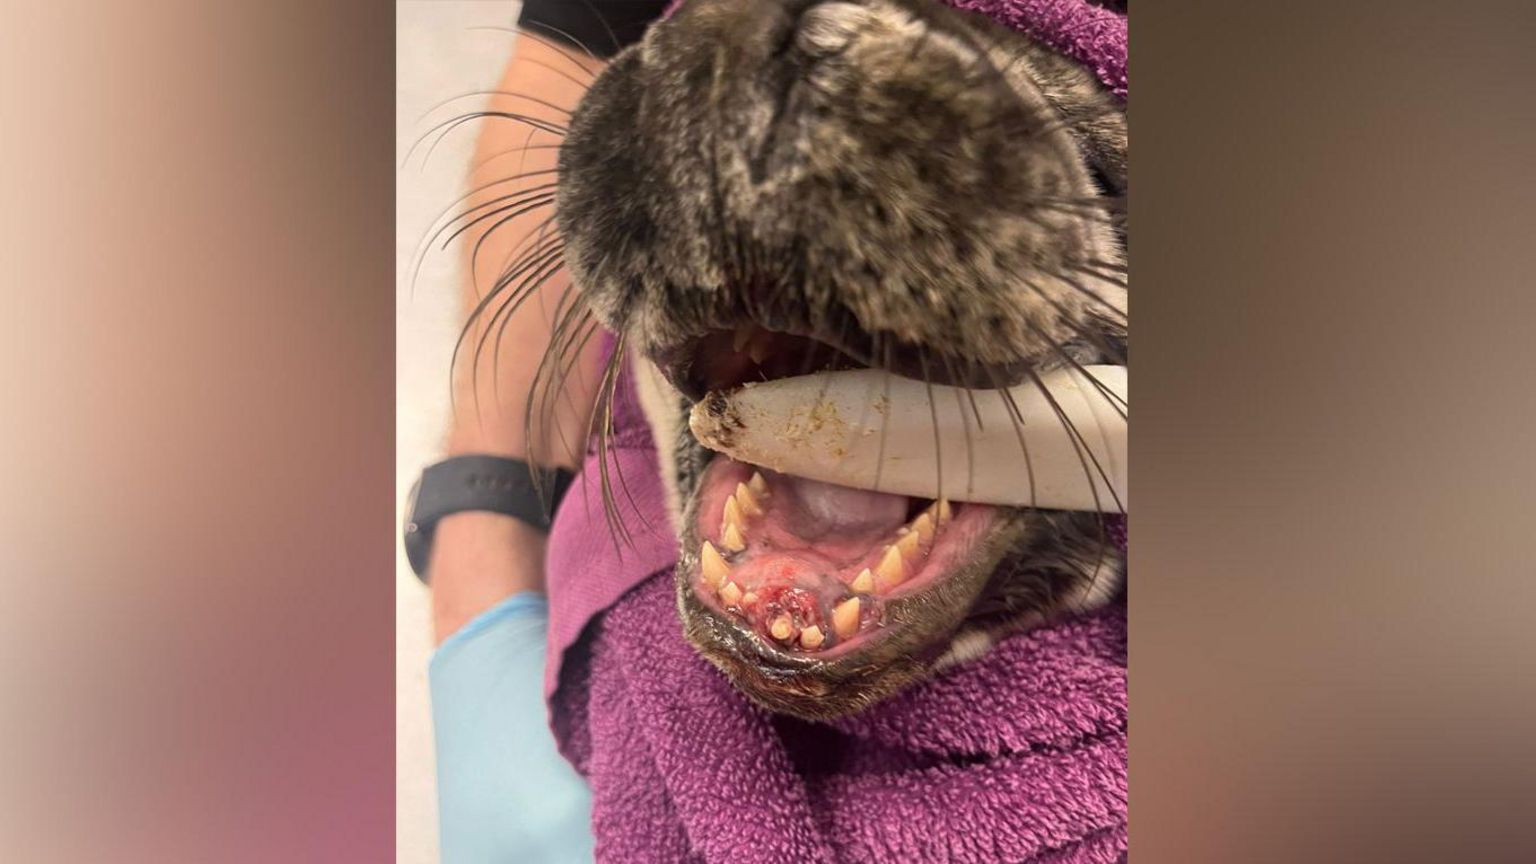 The injured seal's teeth